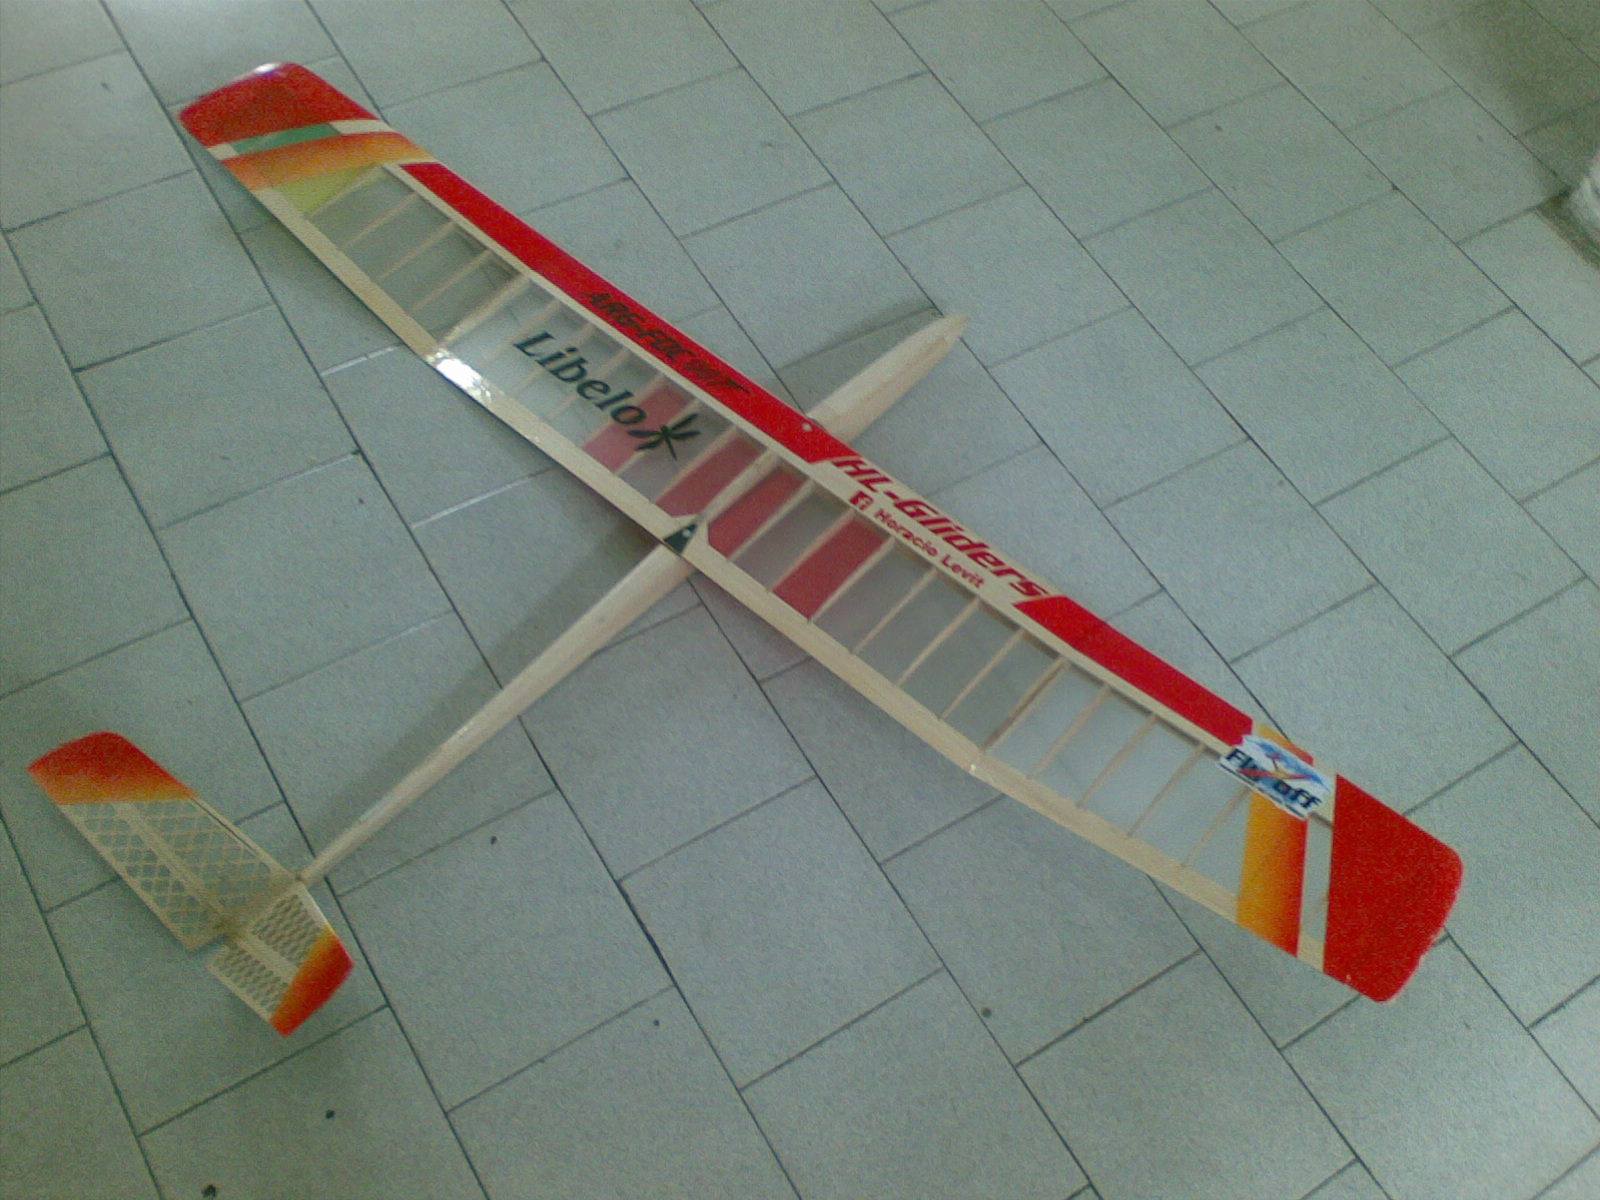 Mücke (Mosquito) 3 gliders